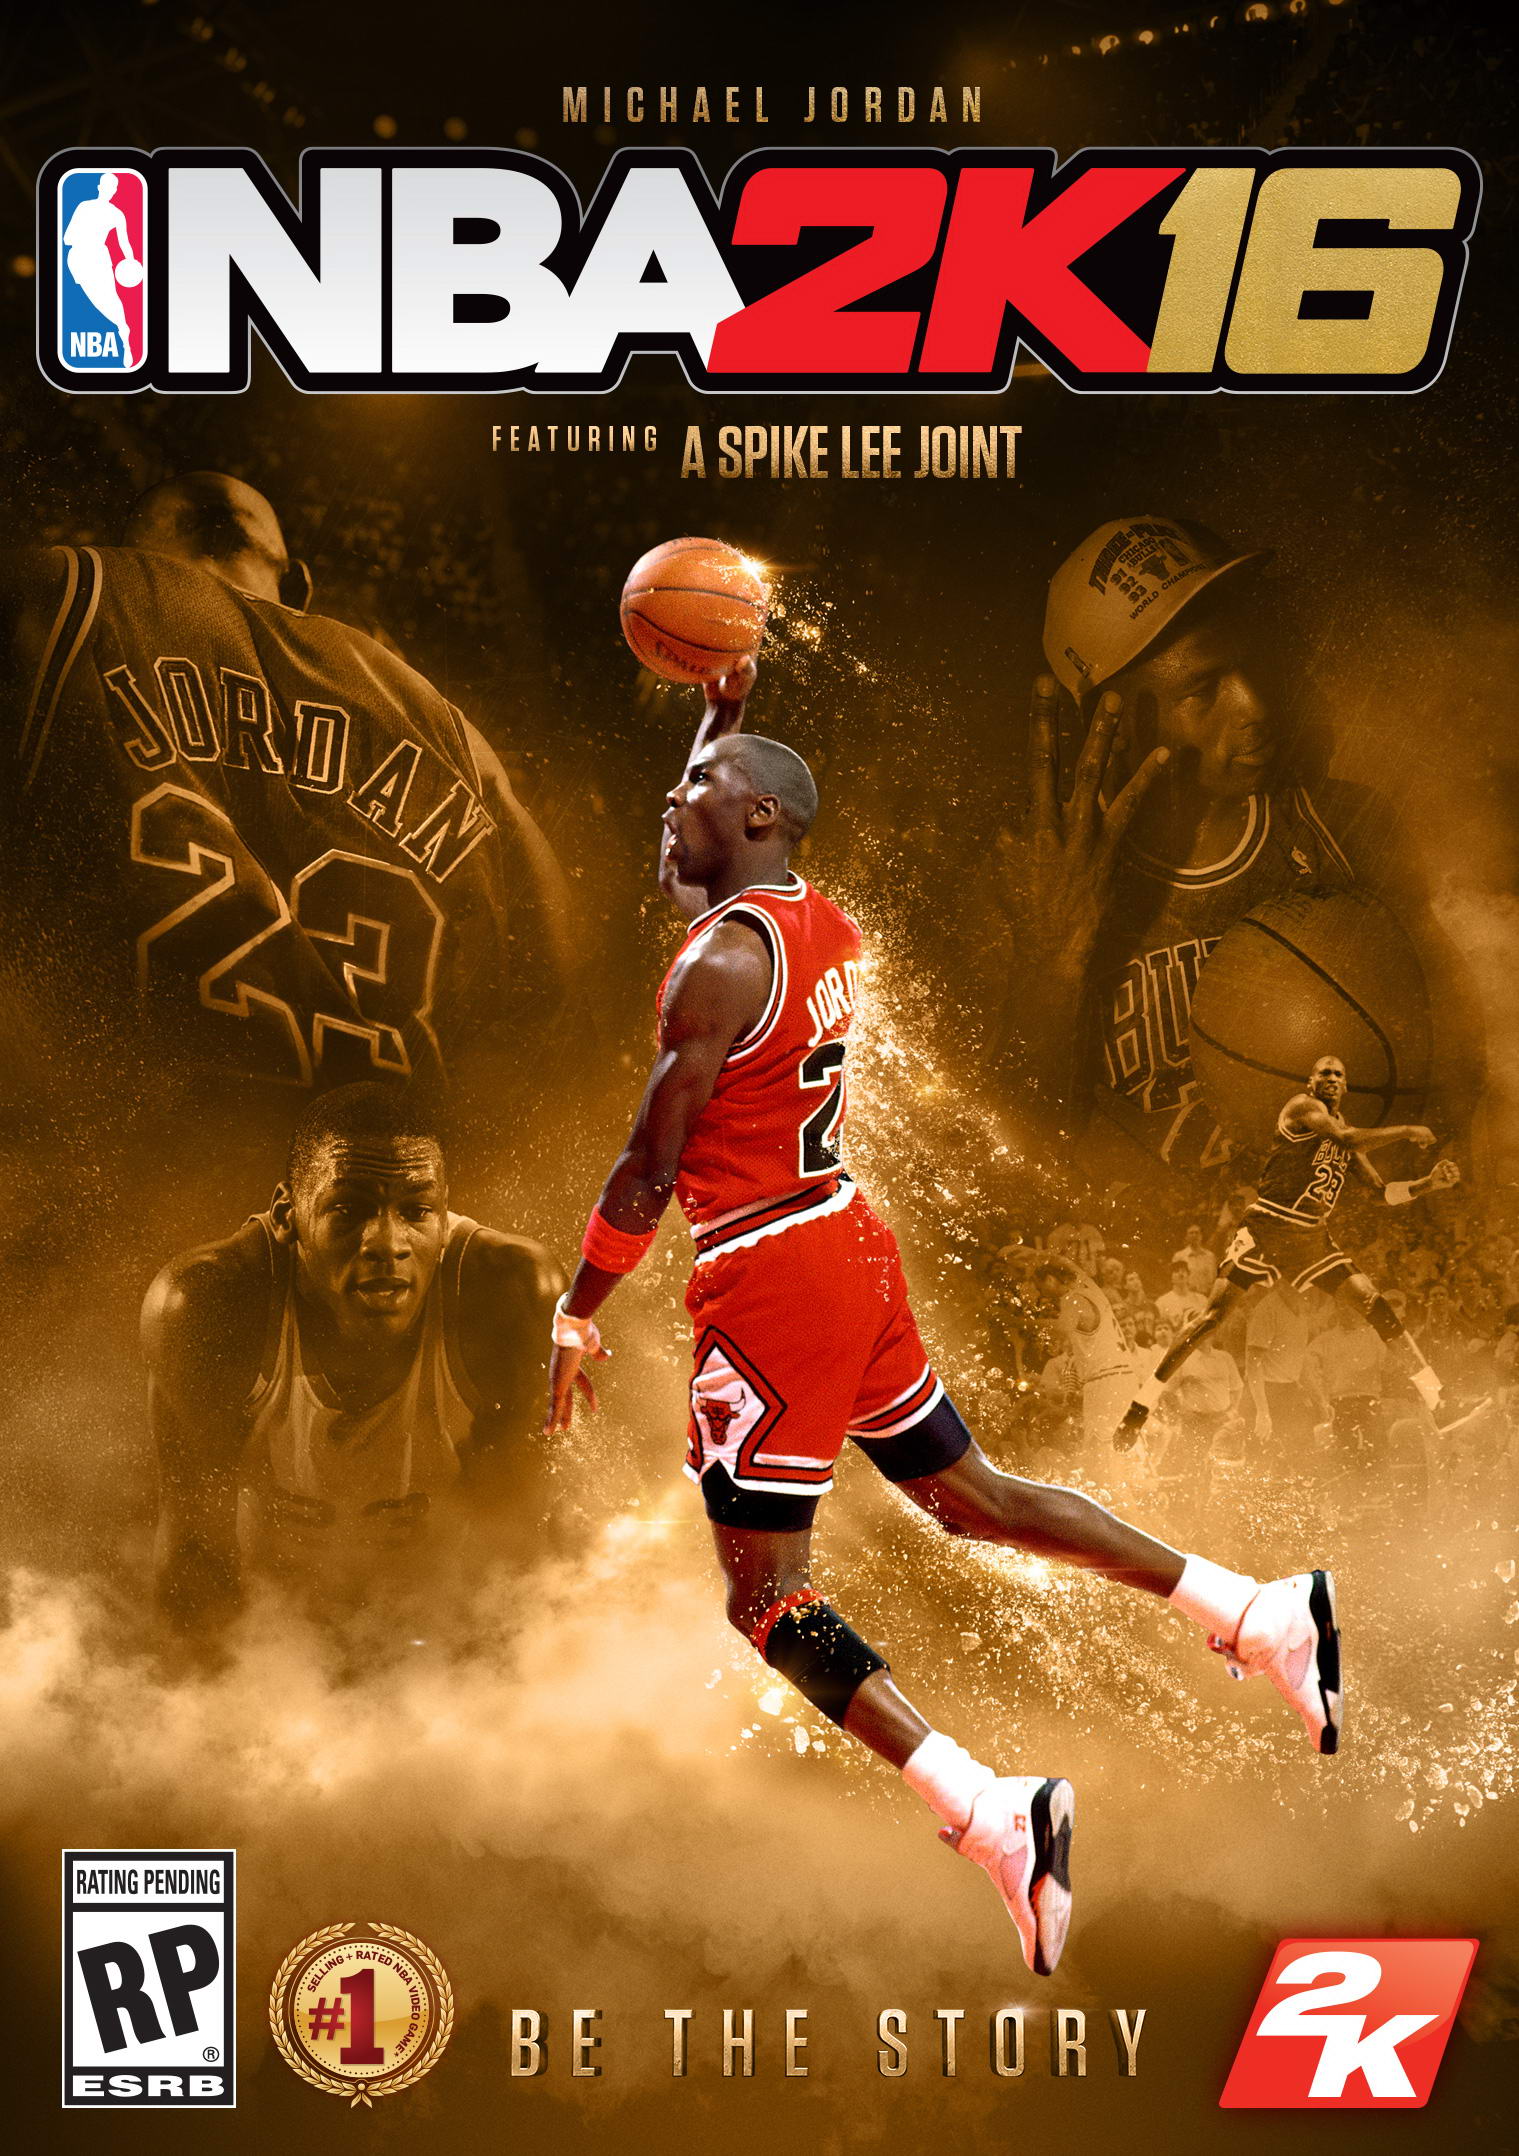 NBA 2K16》推出由NBA 傳奇巨星麥可喬丹擔任封面人物「空中飛人特別版」《NBA 2K16》 - 巴哈姆特